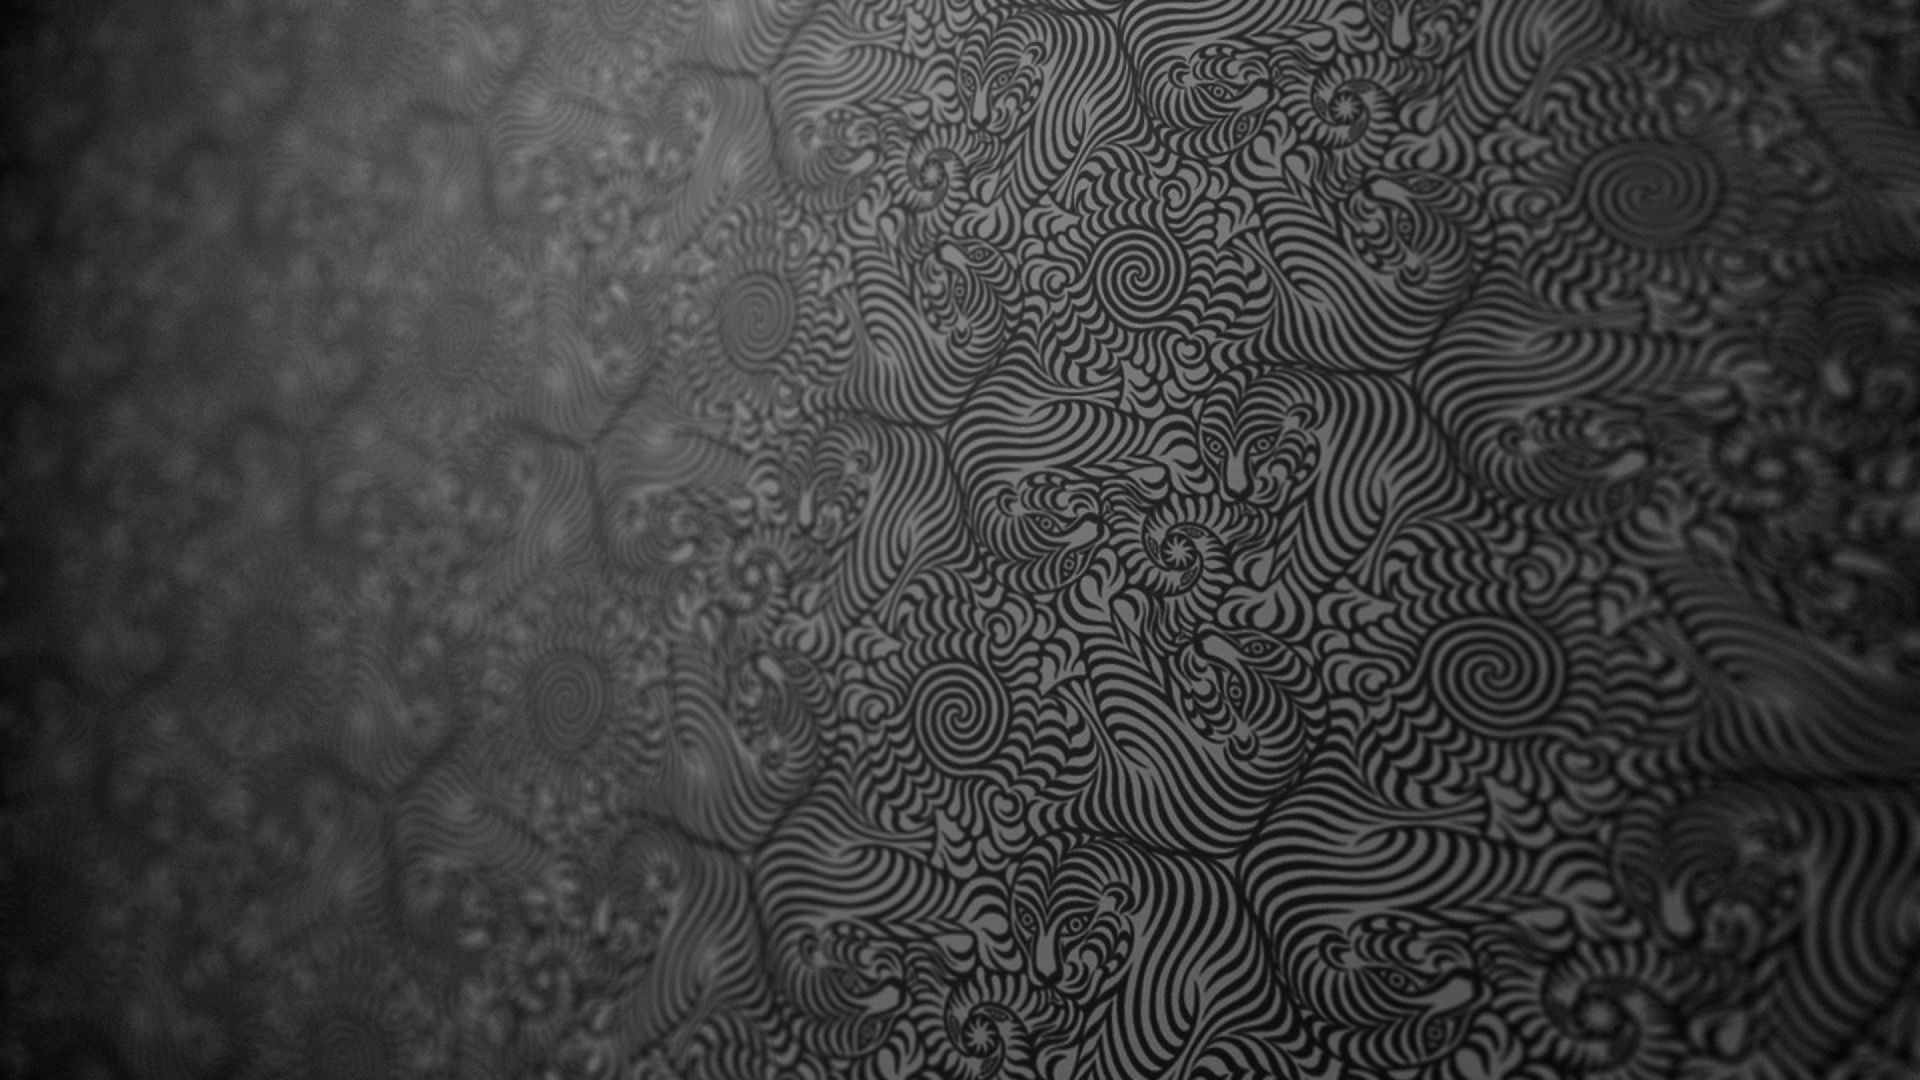 Texture Black White Patterns Tigers Mac Wallpaper Download Free